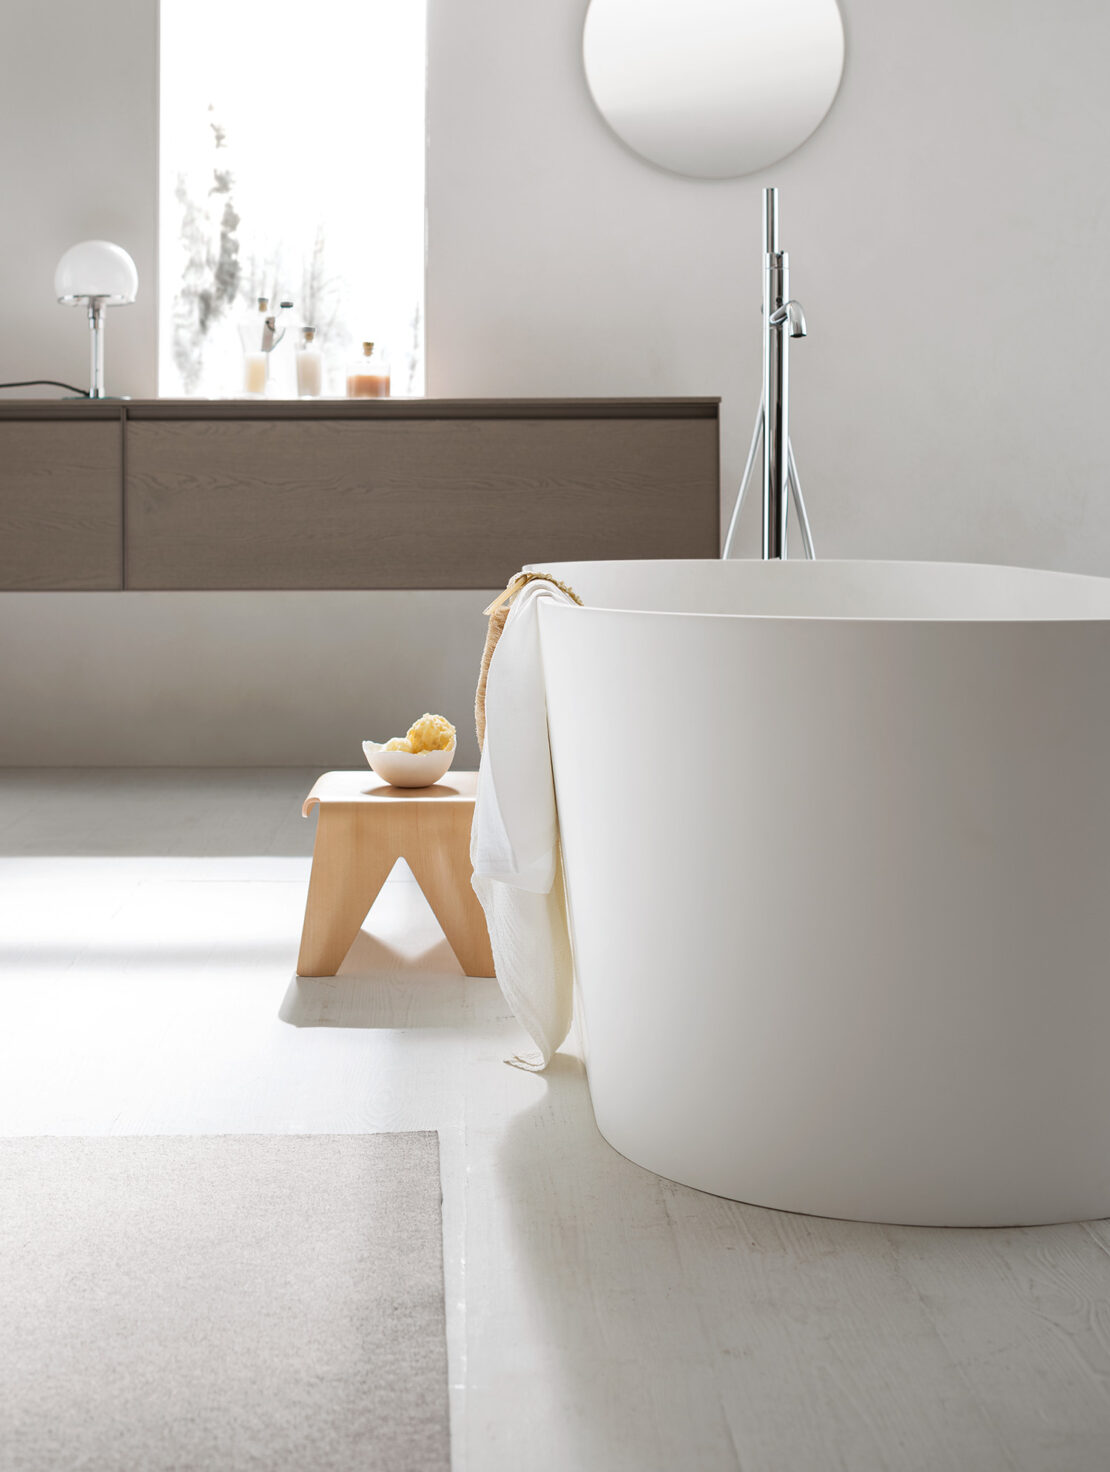 vasca freestanding e sgabellino in bagno stile nordico